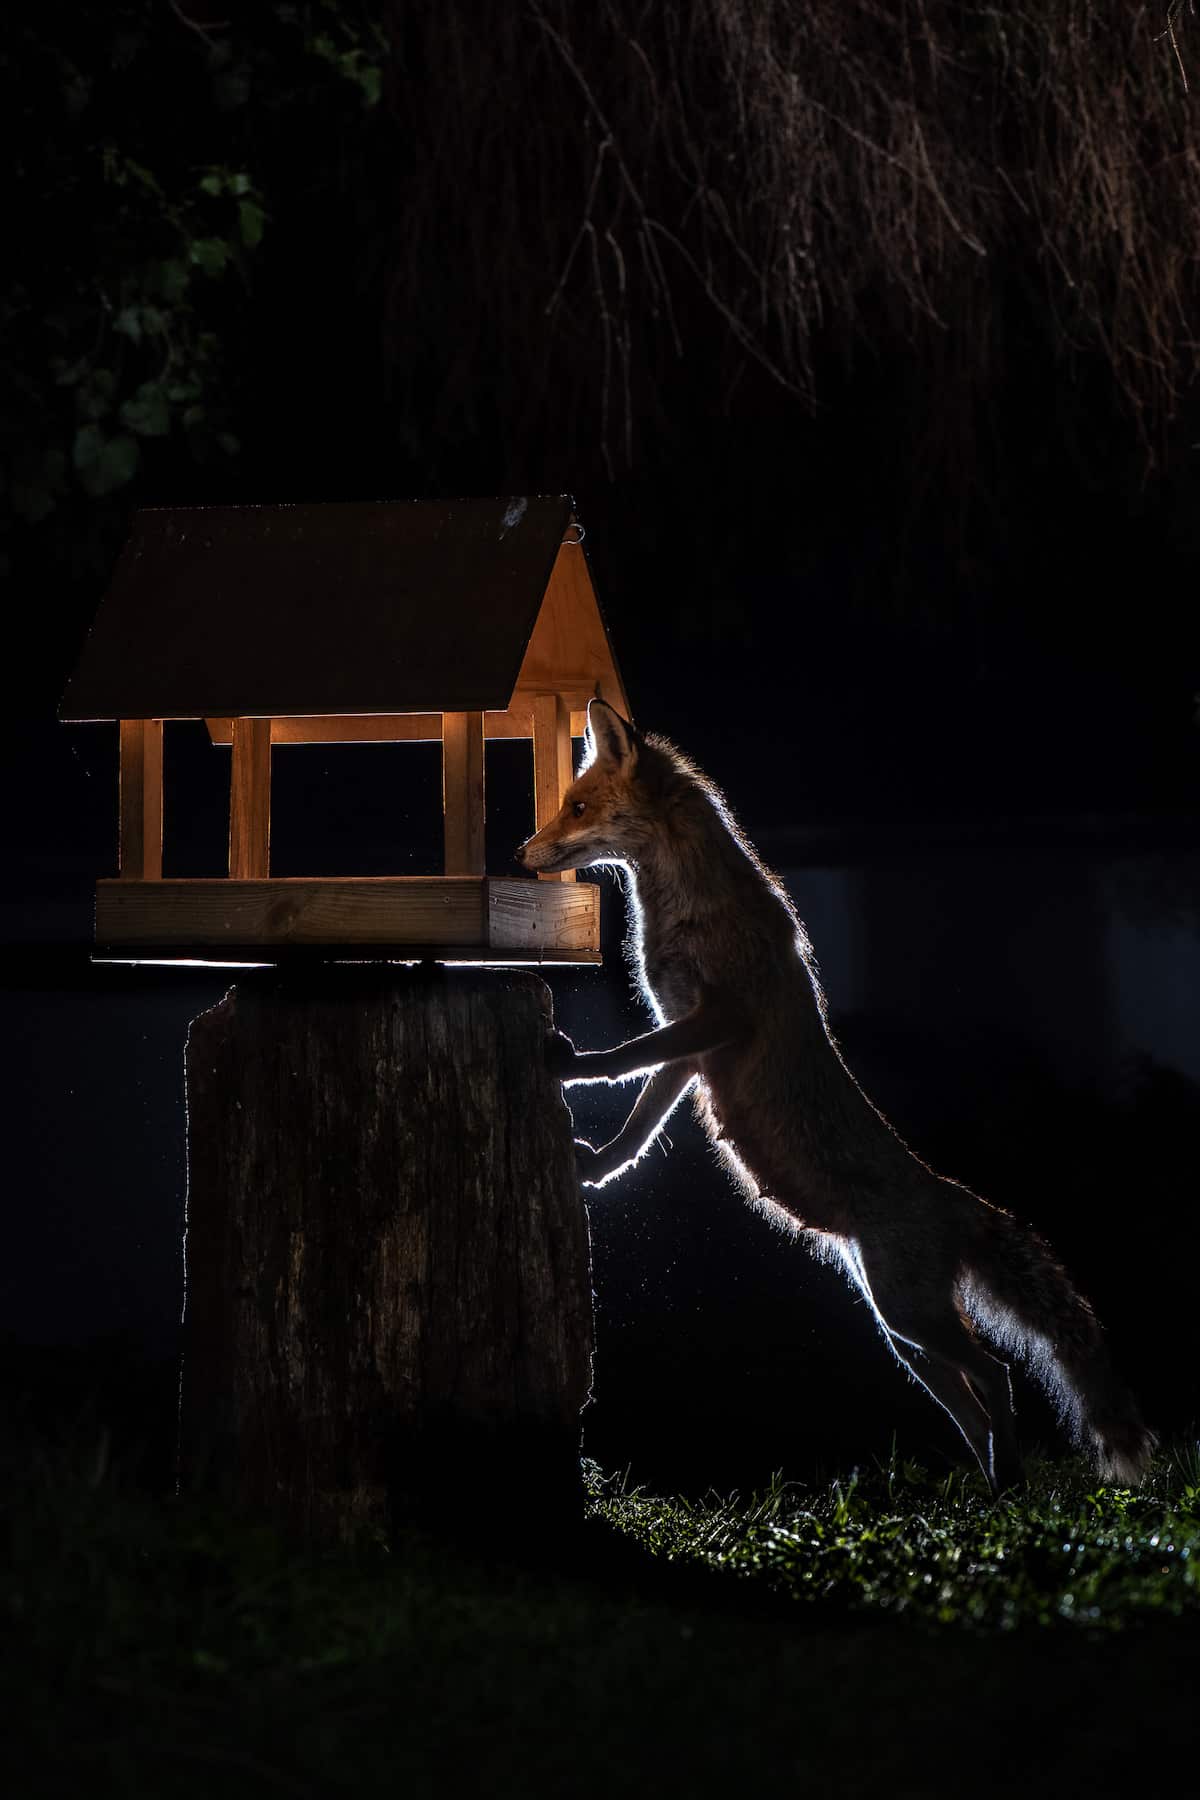 Photos of Foxes by Milan Radisics